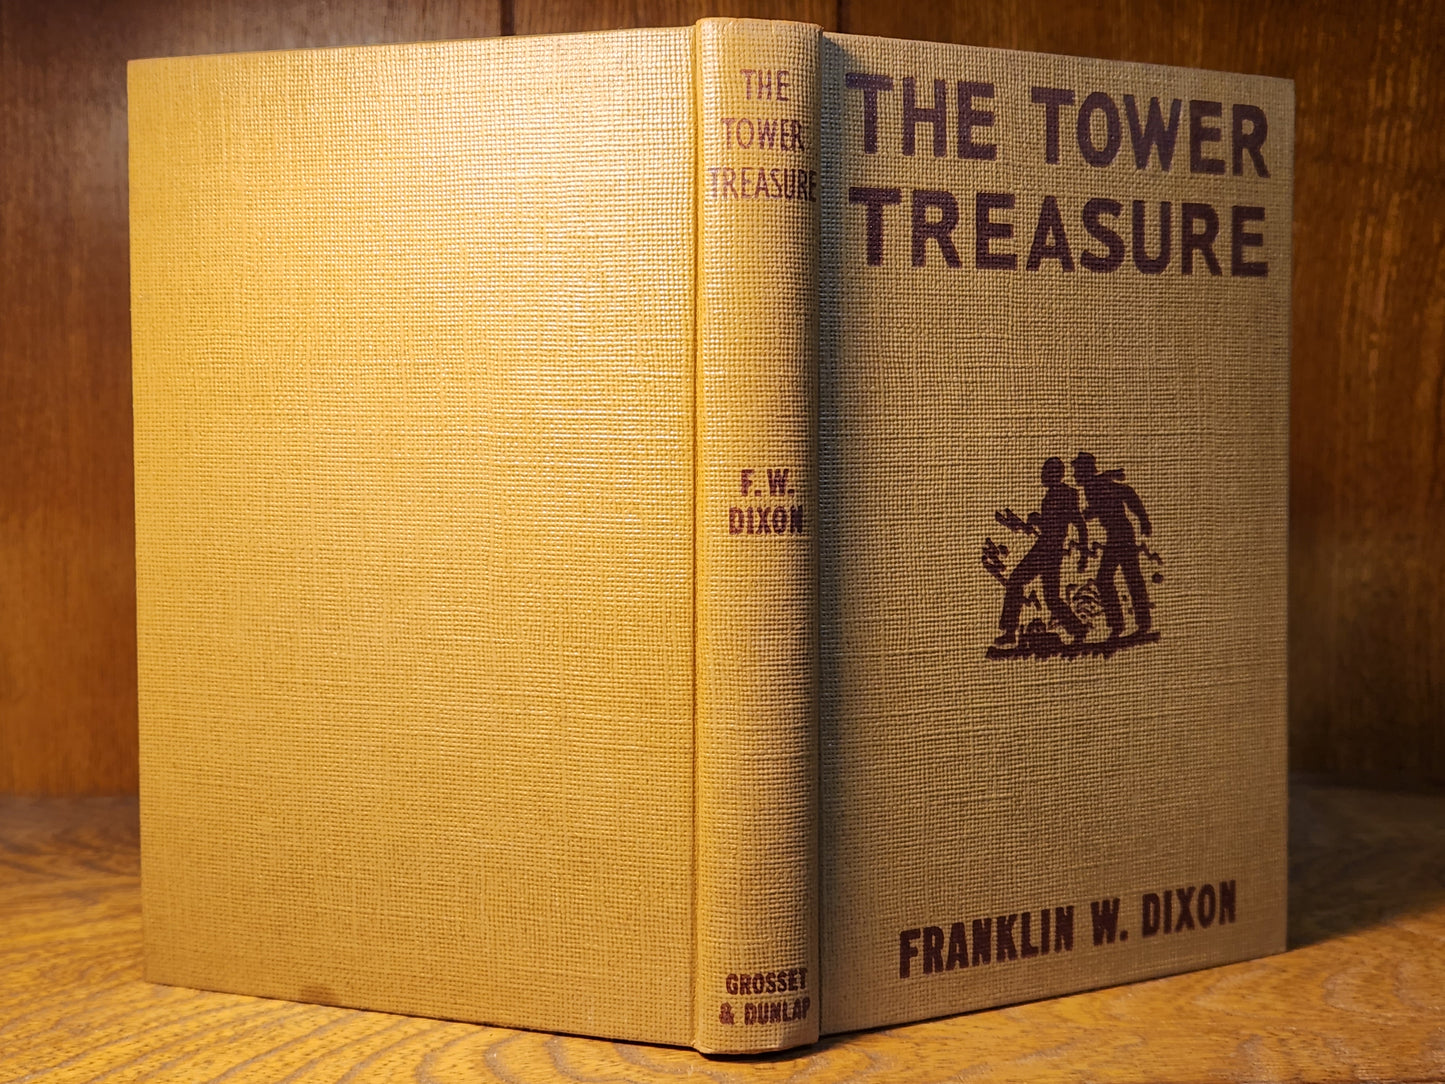 The Hardy Boys #1 The Tower Treasure --1950 B-34-- Franklin W. Dixon